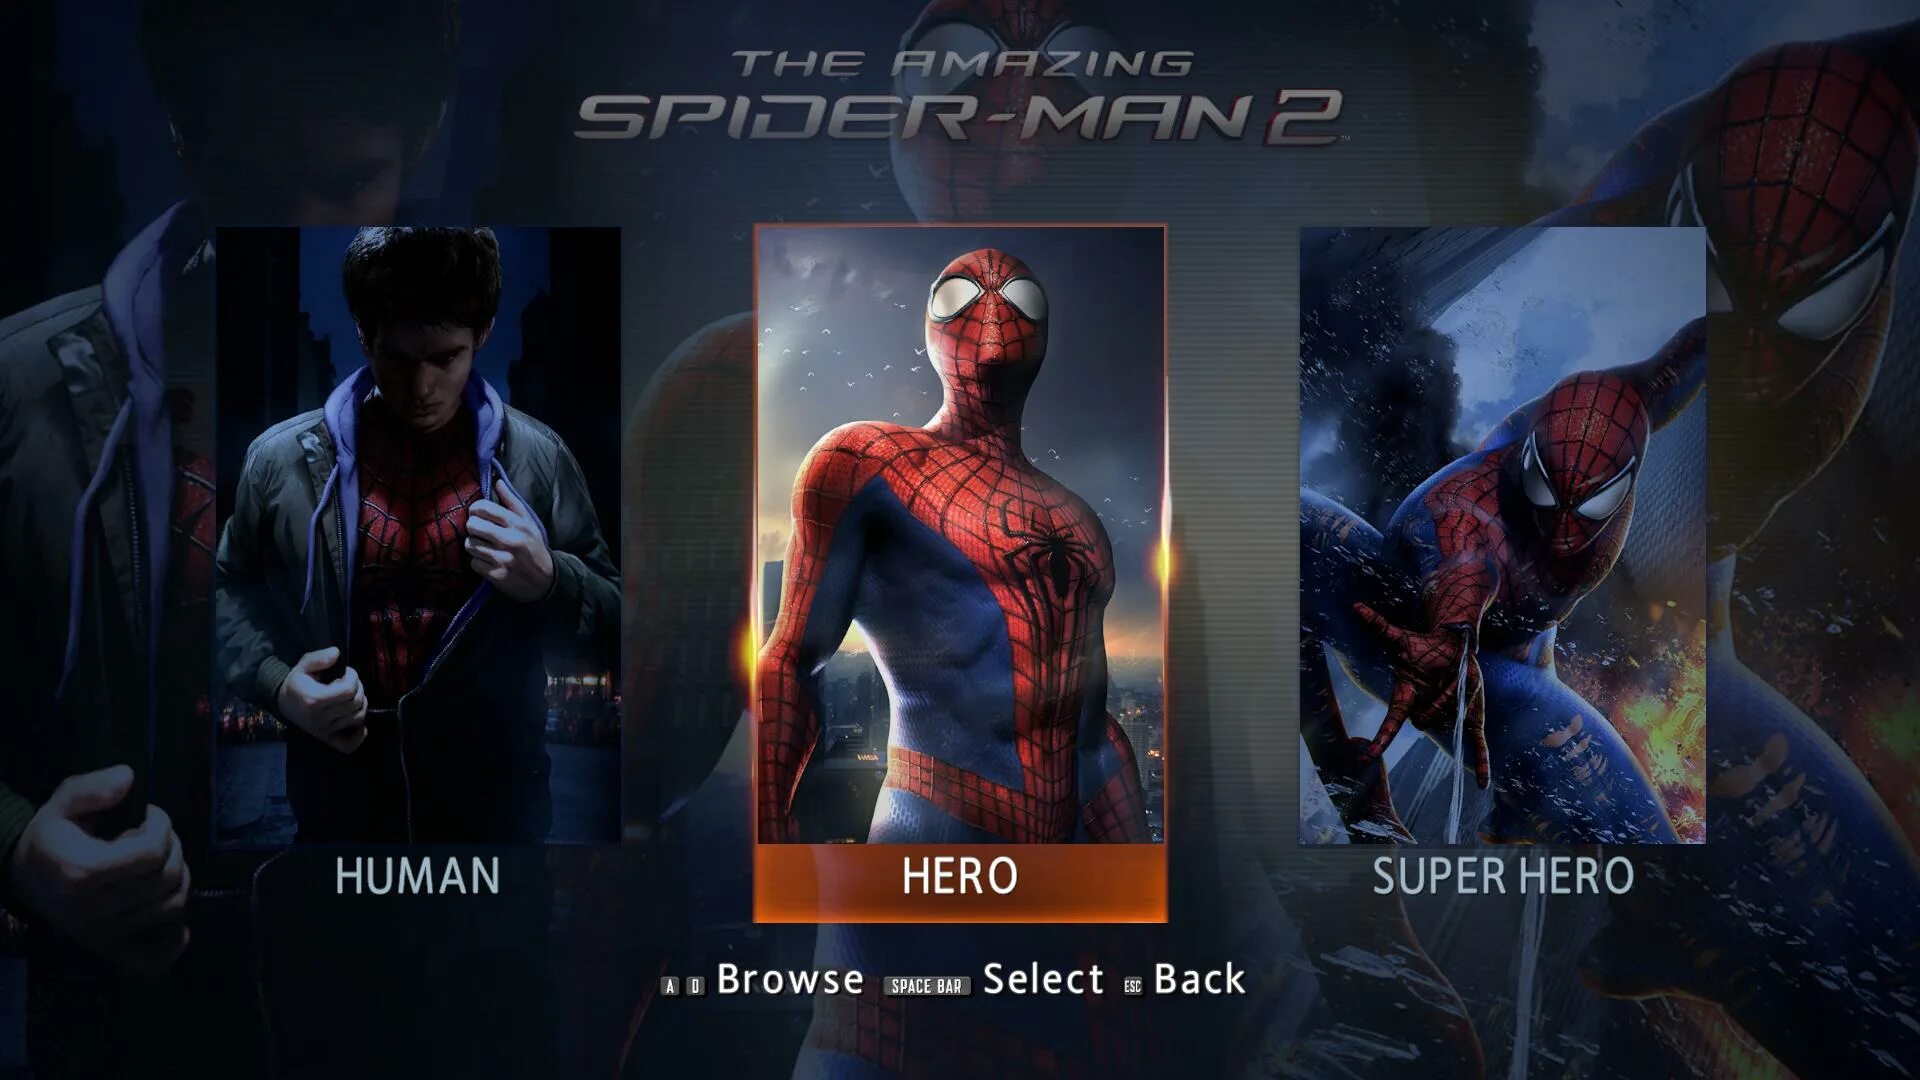 Spider-man 2 игра 2014. Игра the amazing Spider-man 2 (ps3). Игра на пс4 человек паук 2. Человек паук эмейзинг 2 игра. Все части человека паука по порядку список